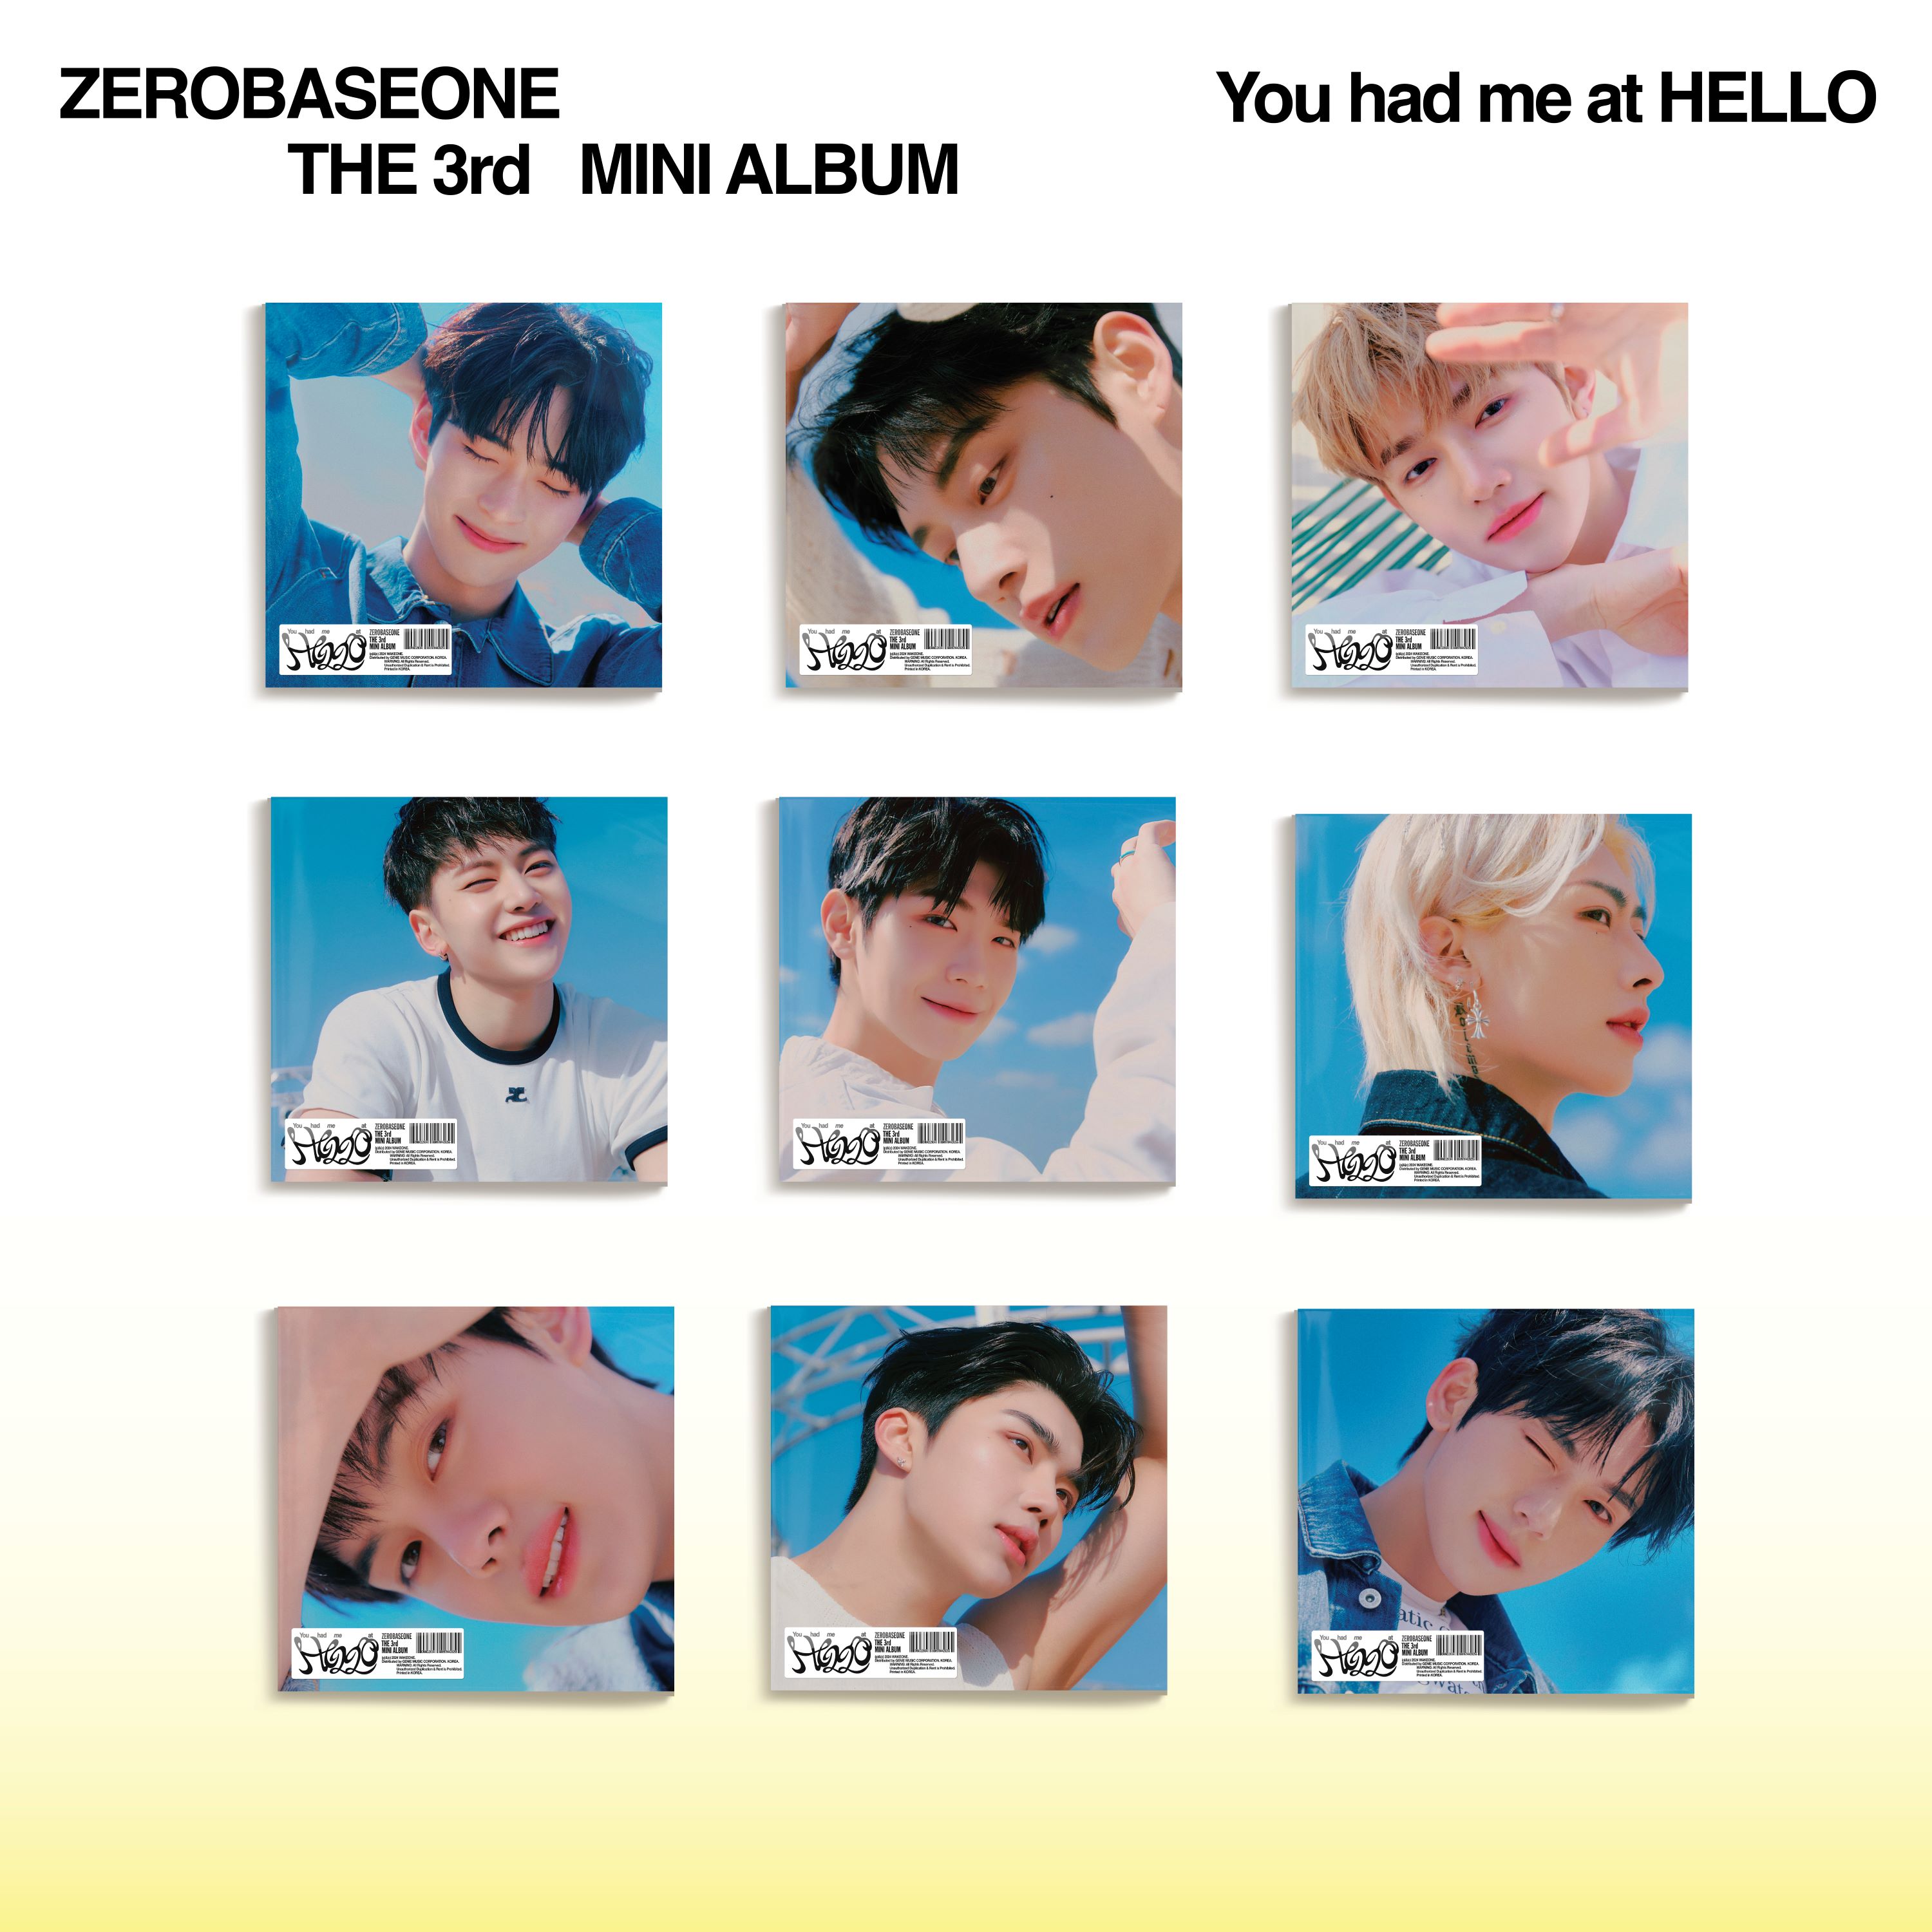 ZEROBASEONE The 3rd Mini Album – You had me at HELLO (Digipack Ver.) (Random)